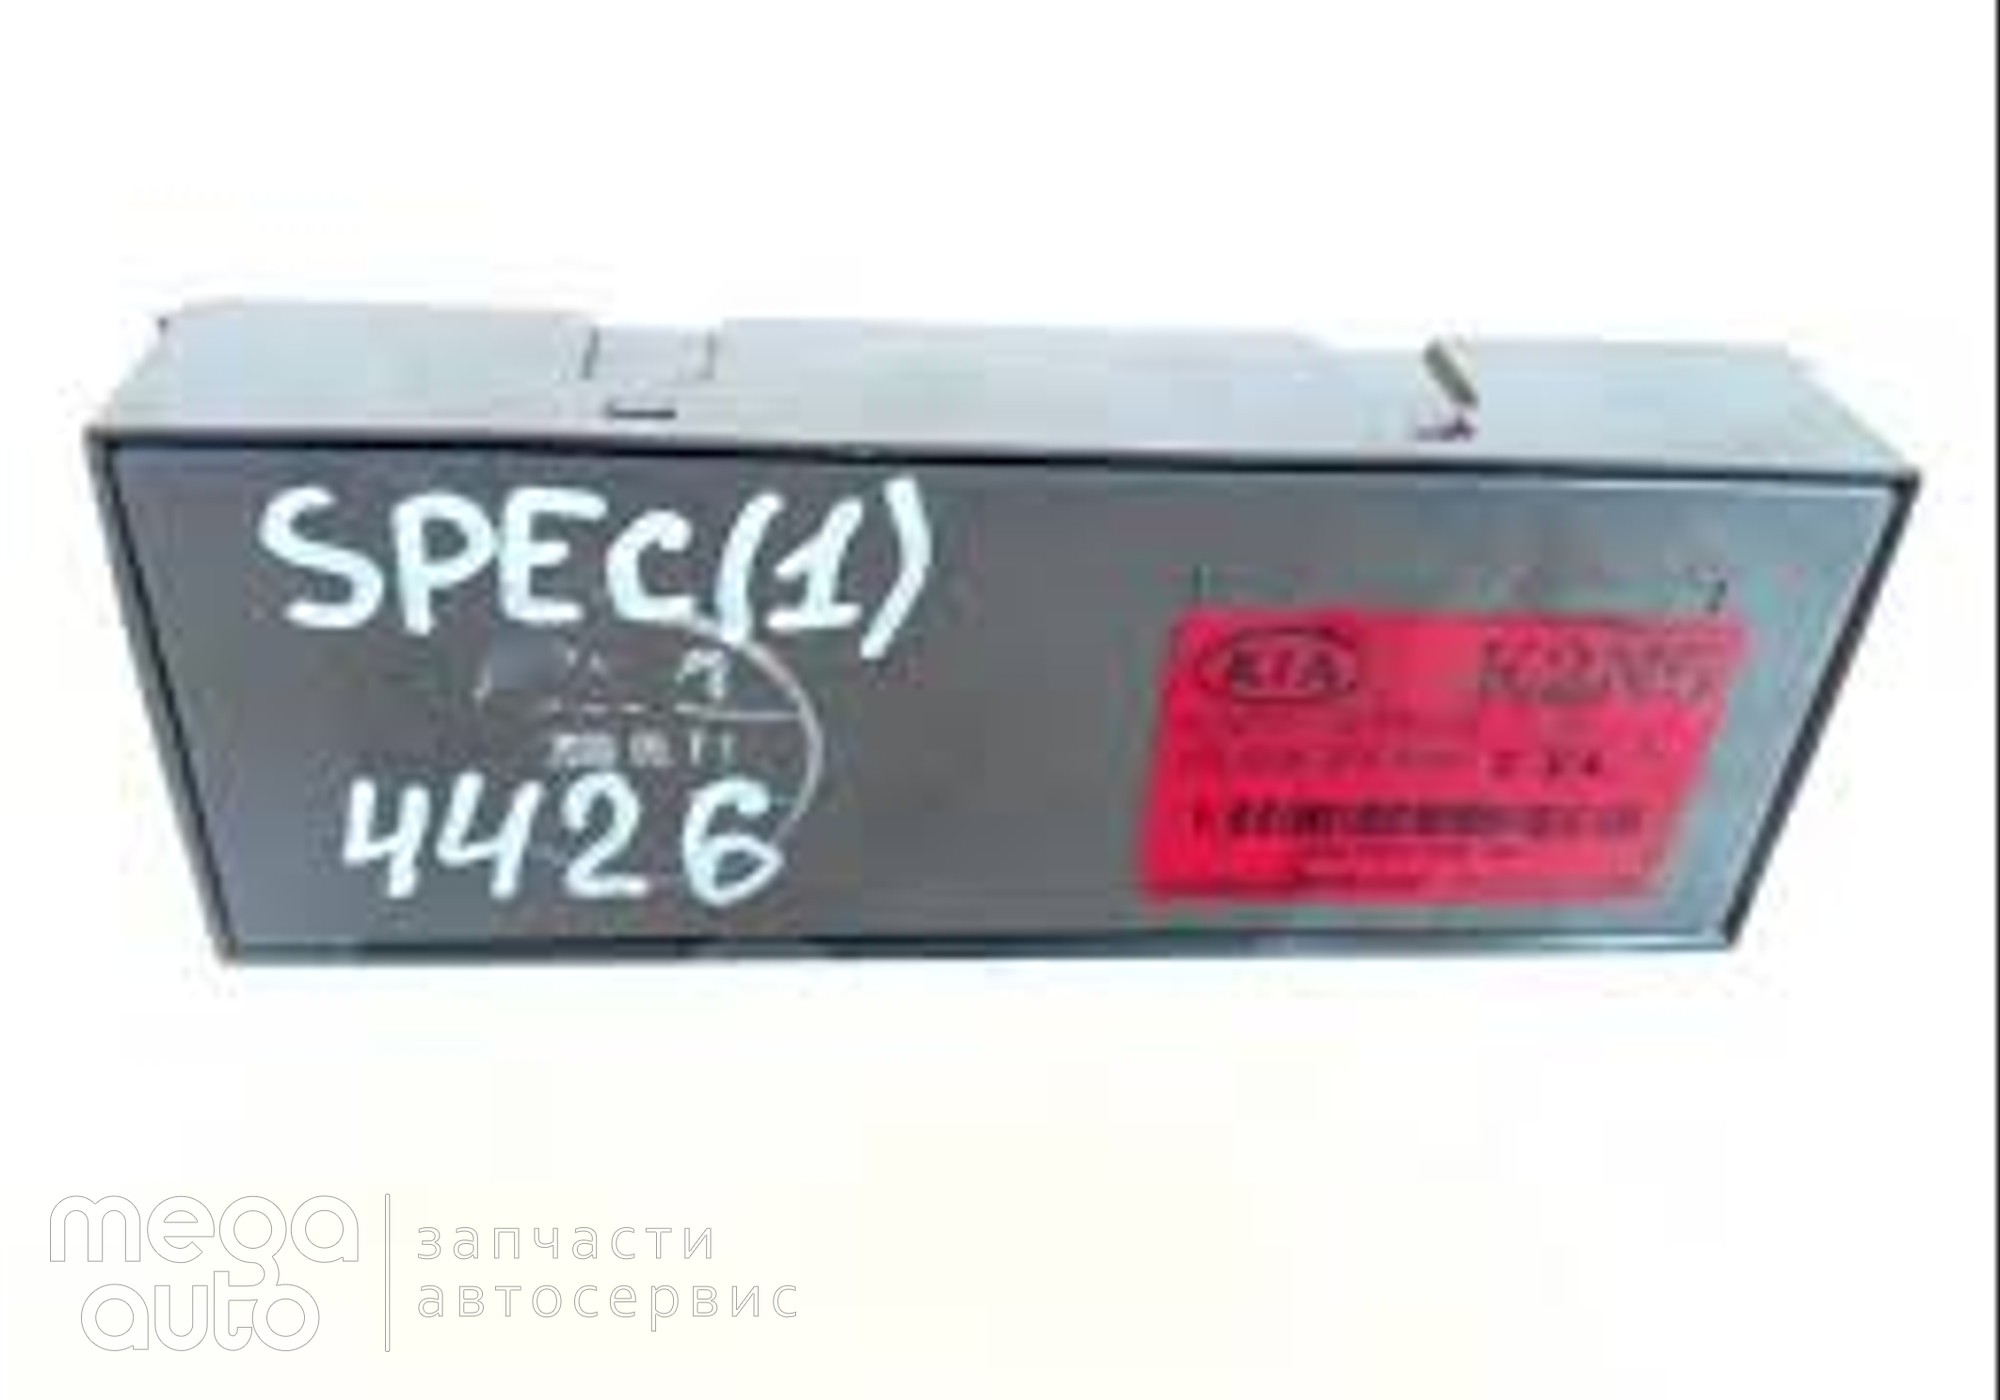 OK2N567580C Блок управления светом фар киа спектра 1 для Kia Spectra I (с 2001 по 2004)